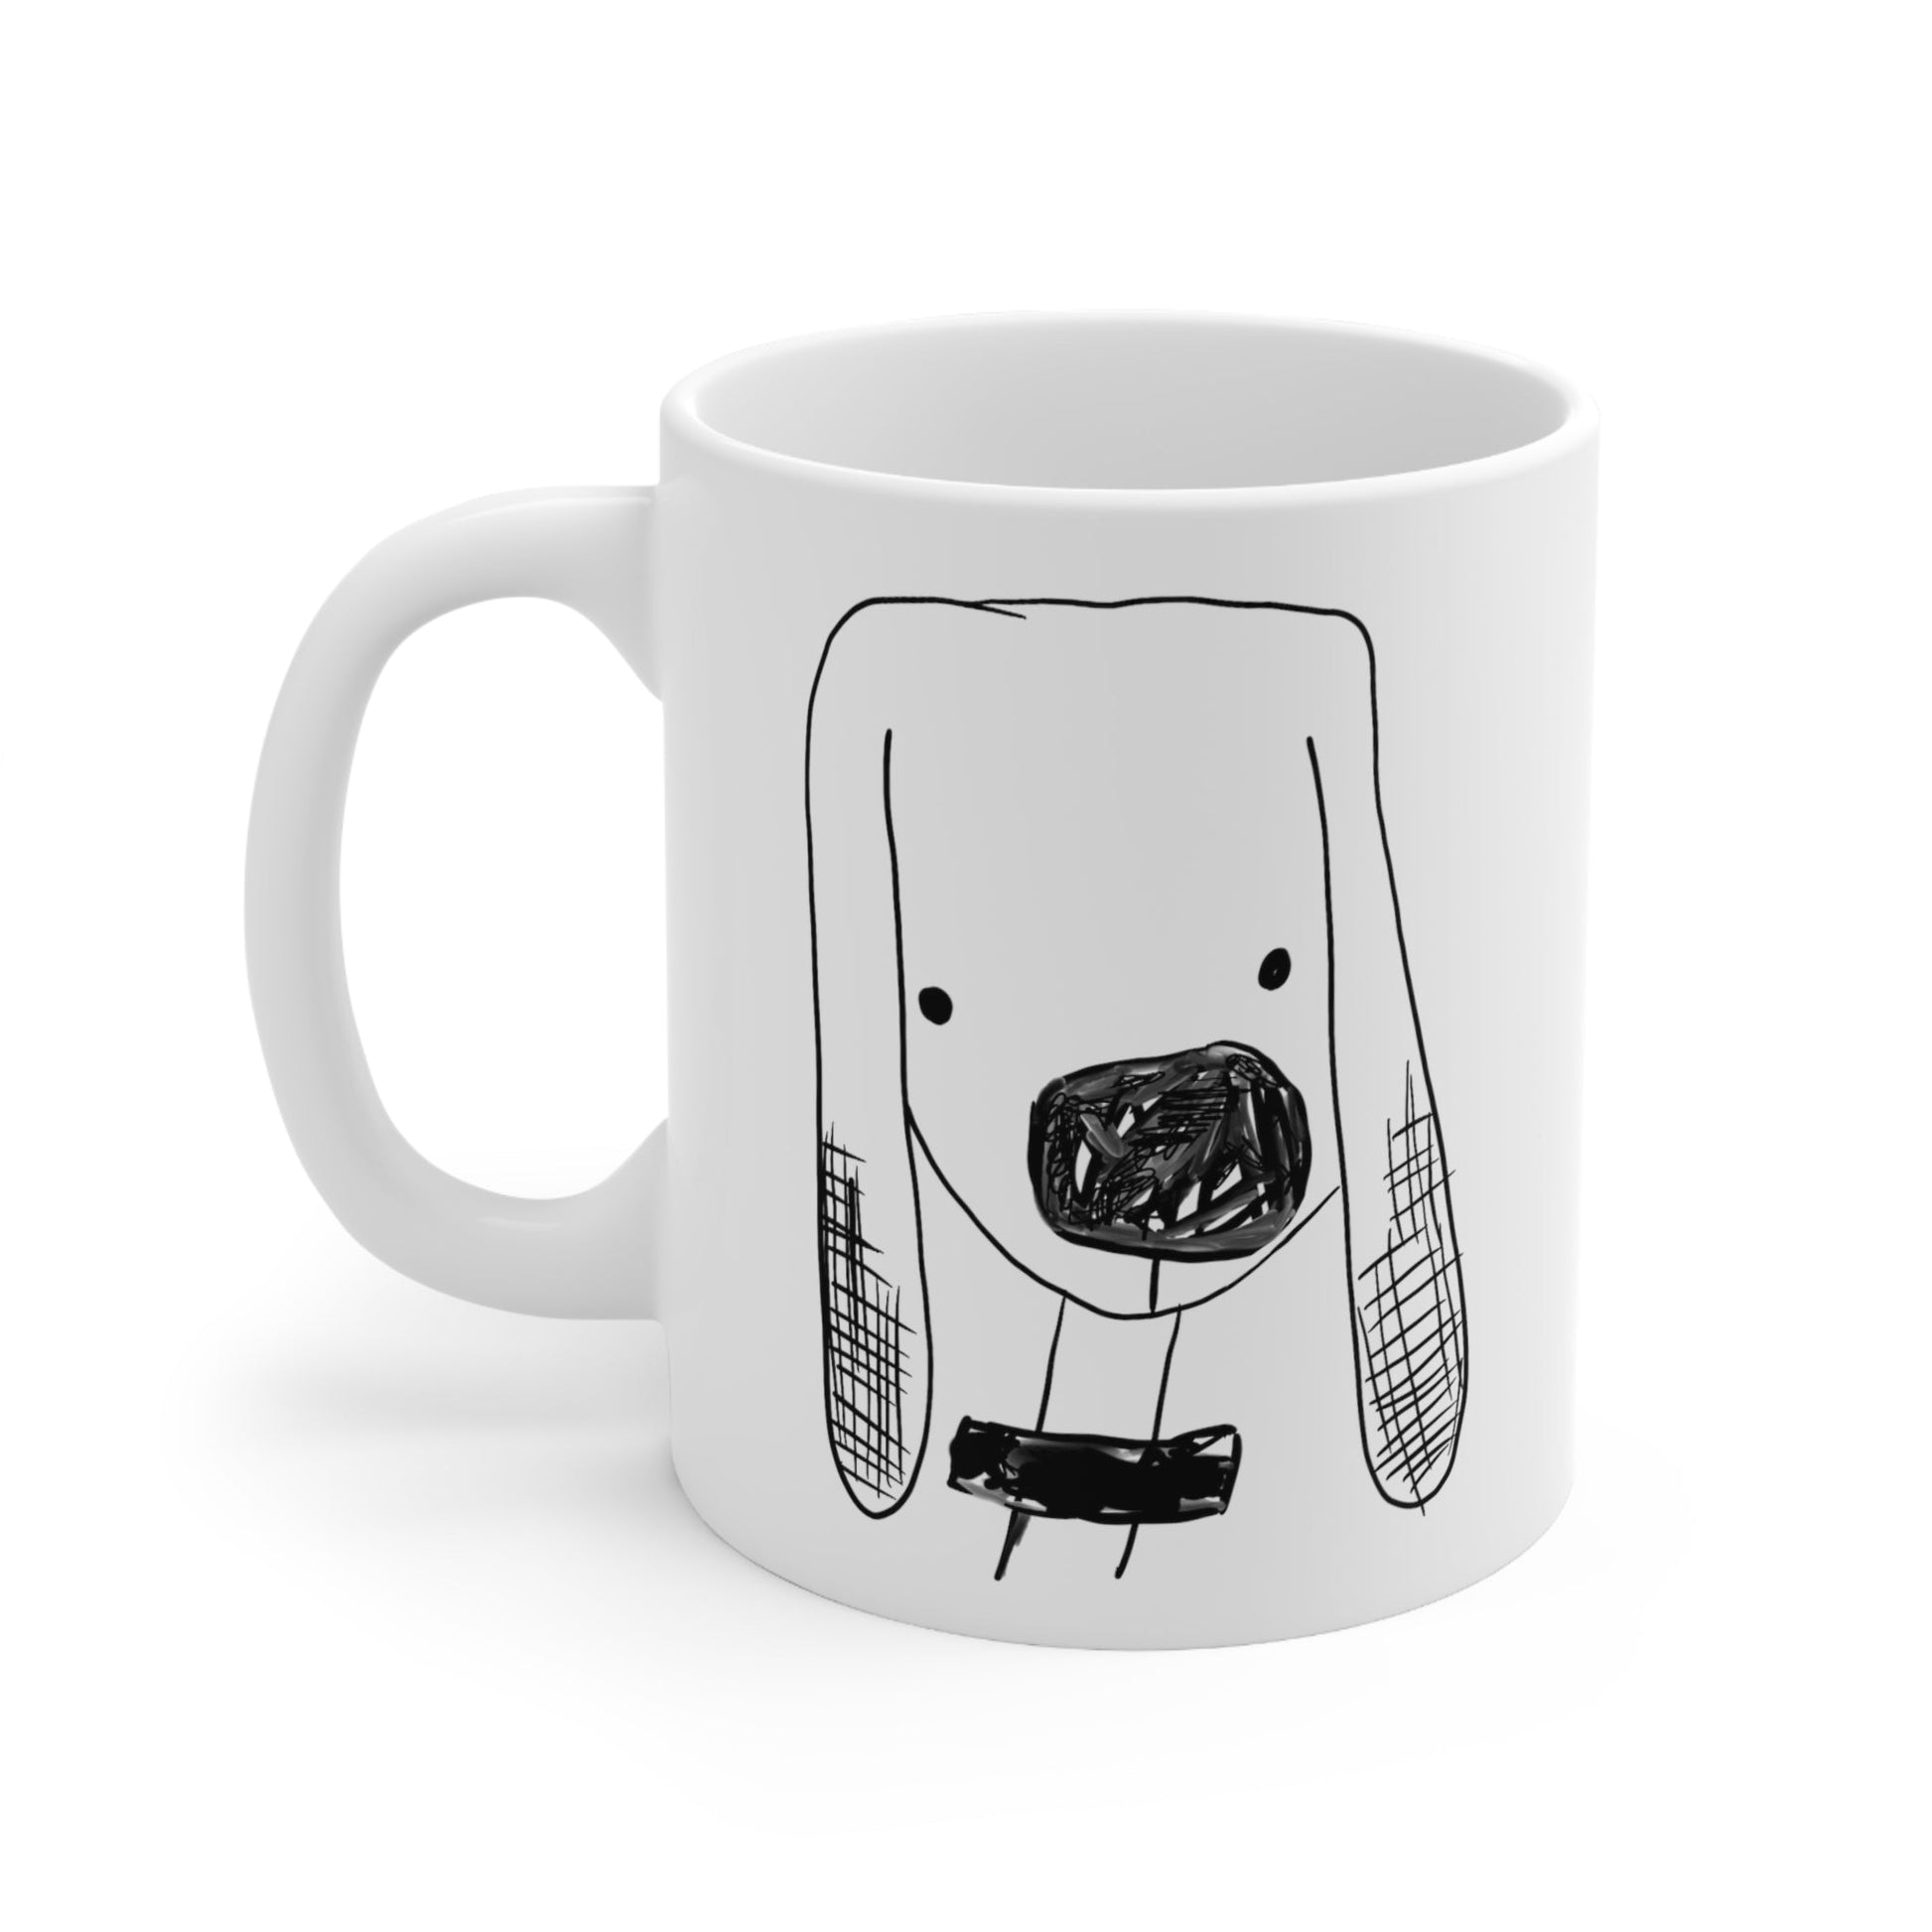 long ear doodle dog mug - The muggin shop